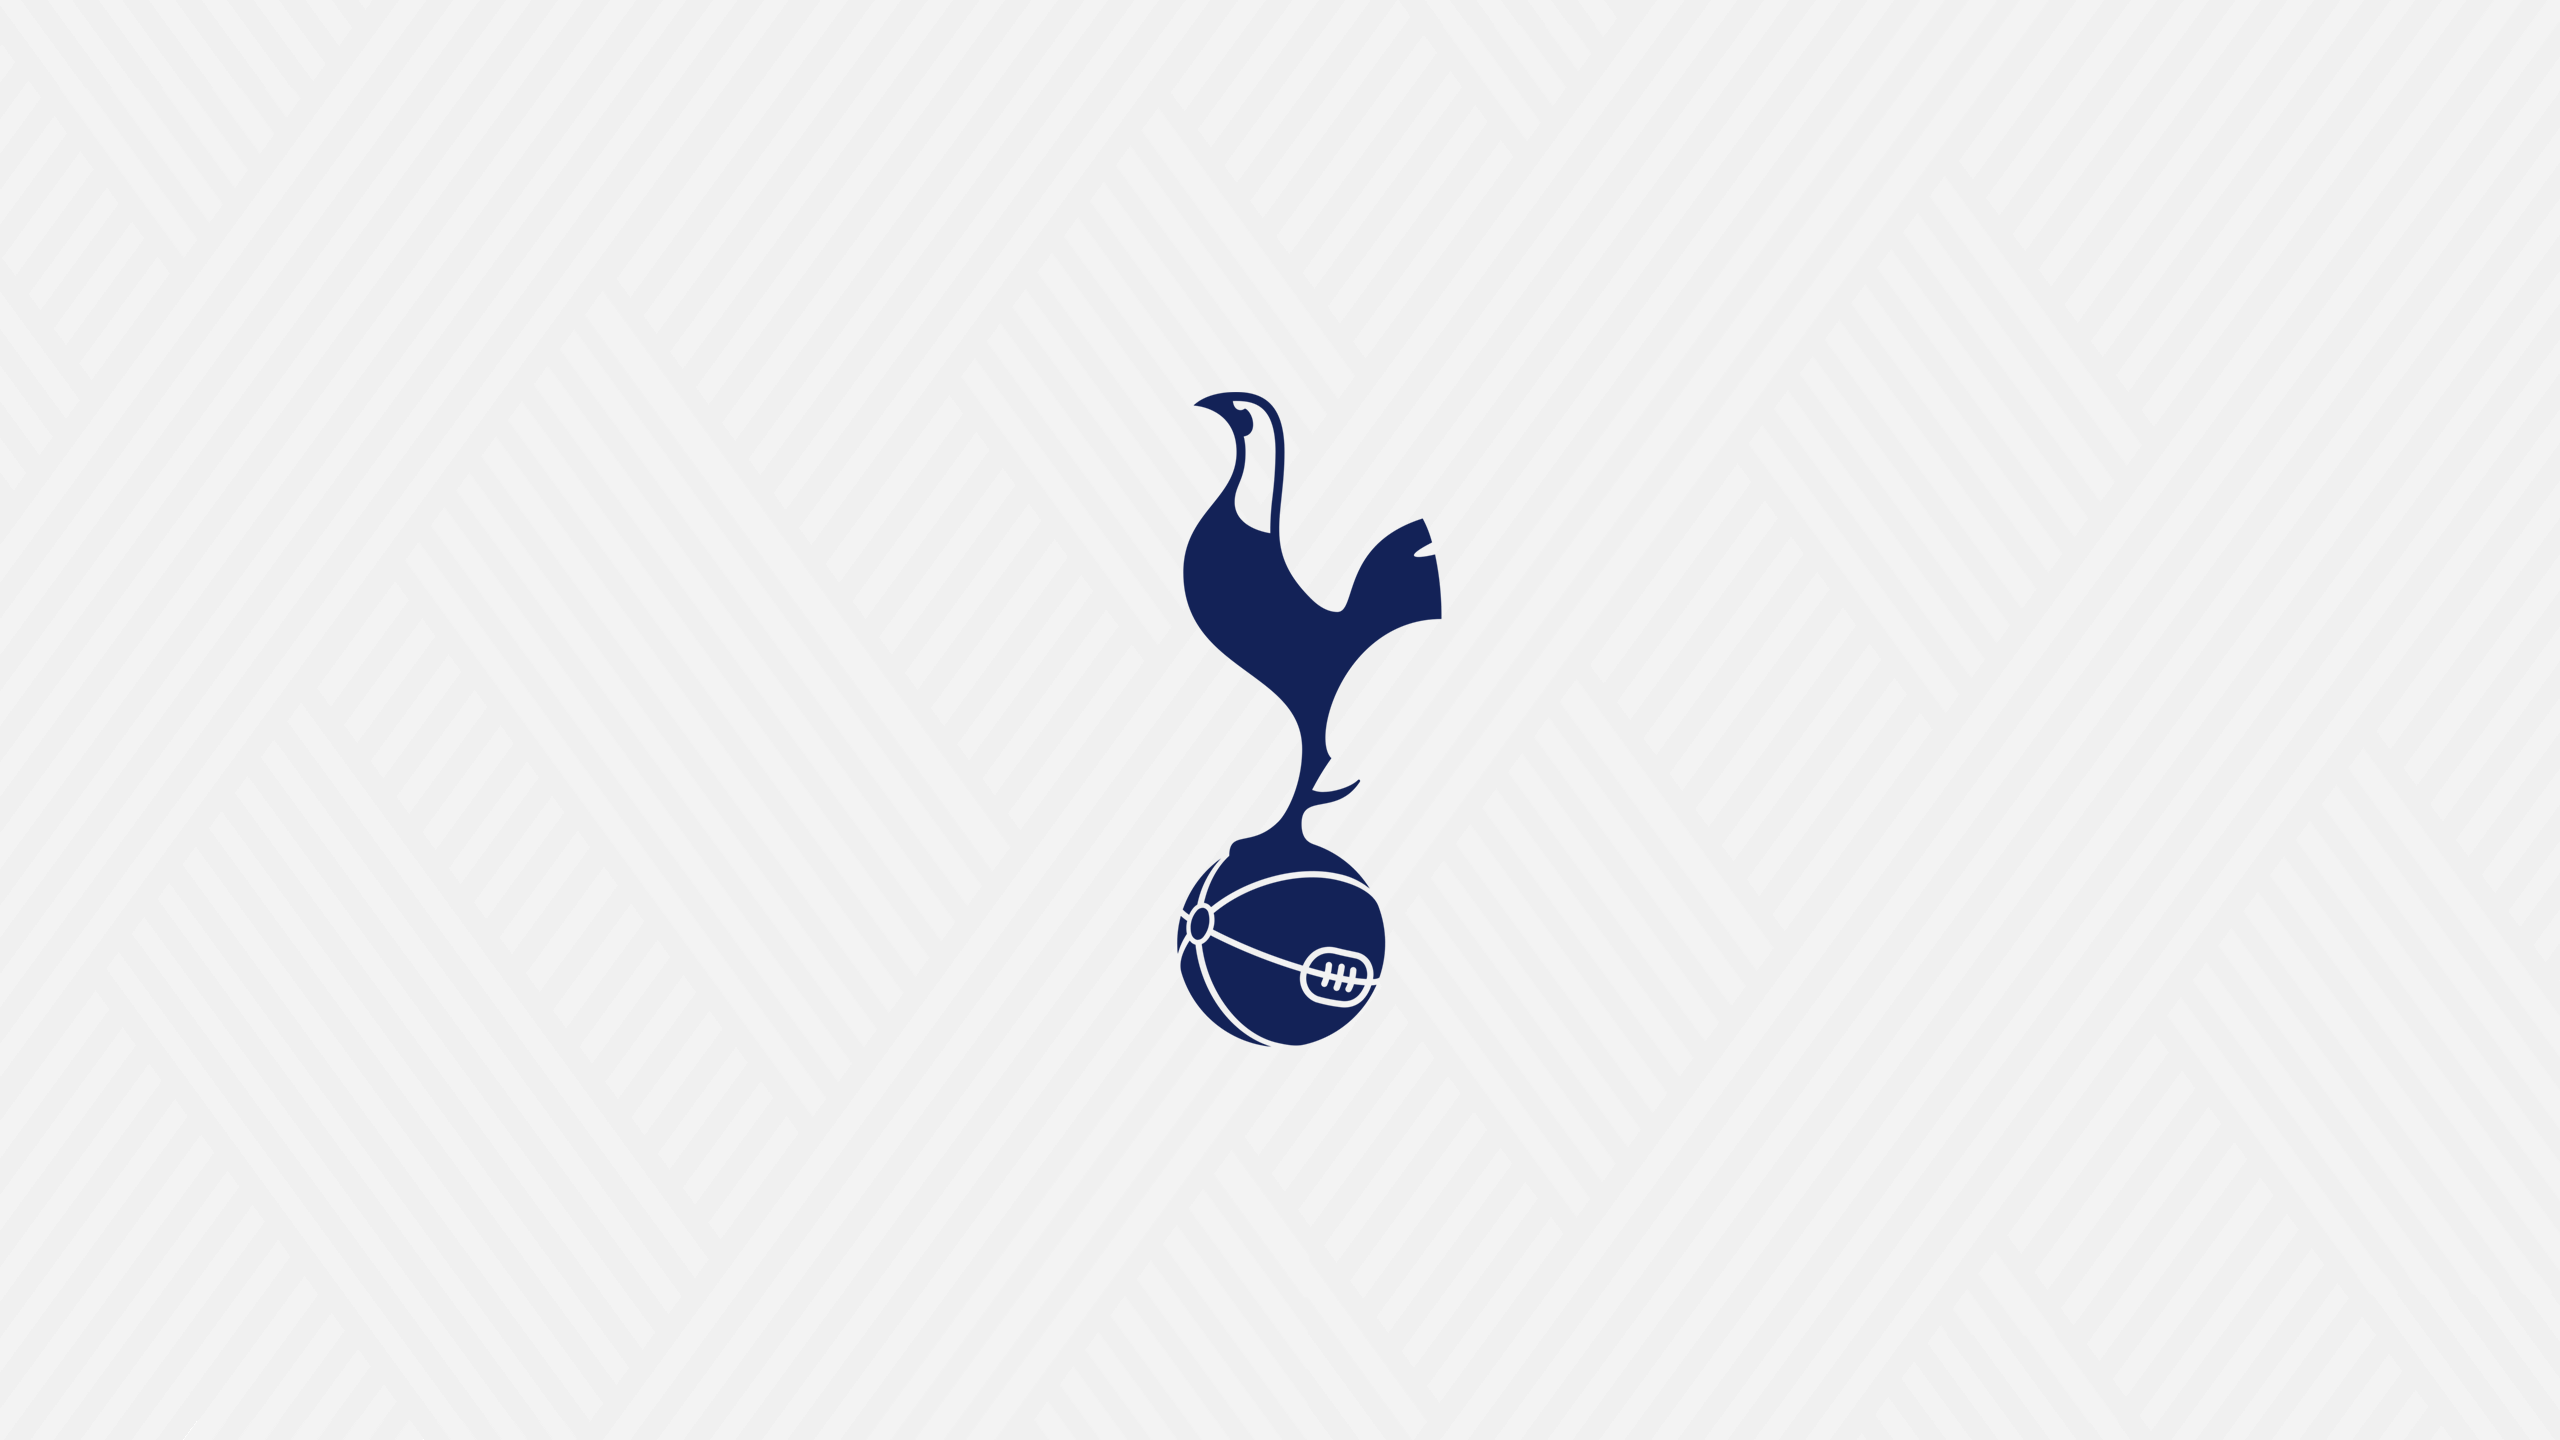 Tottenham Hotspur F.C. - English Premier League - Soccer - Square Bettor